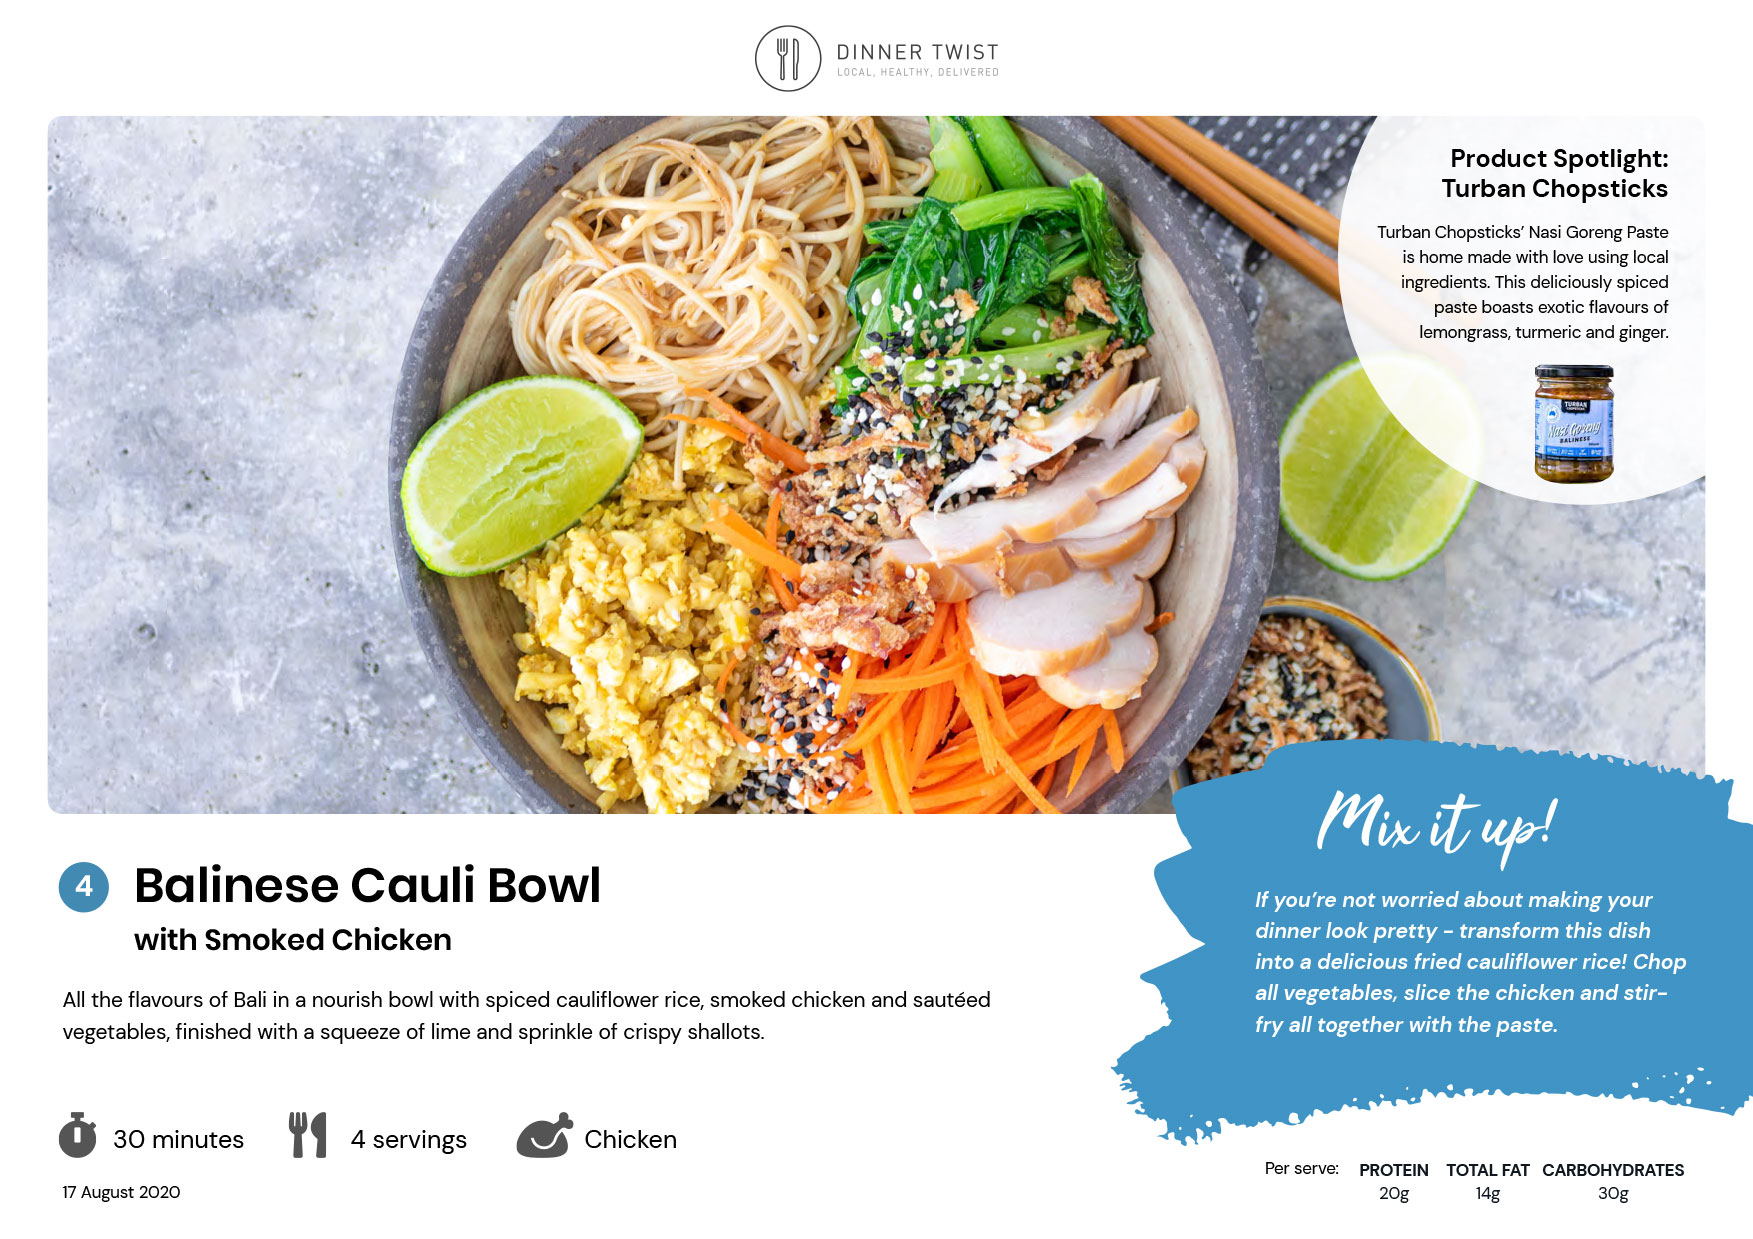 Balinese Cauli Bowl with Smoked Chicken | Dinner Twist